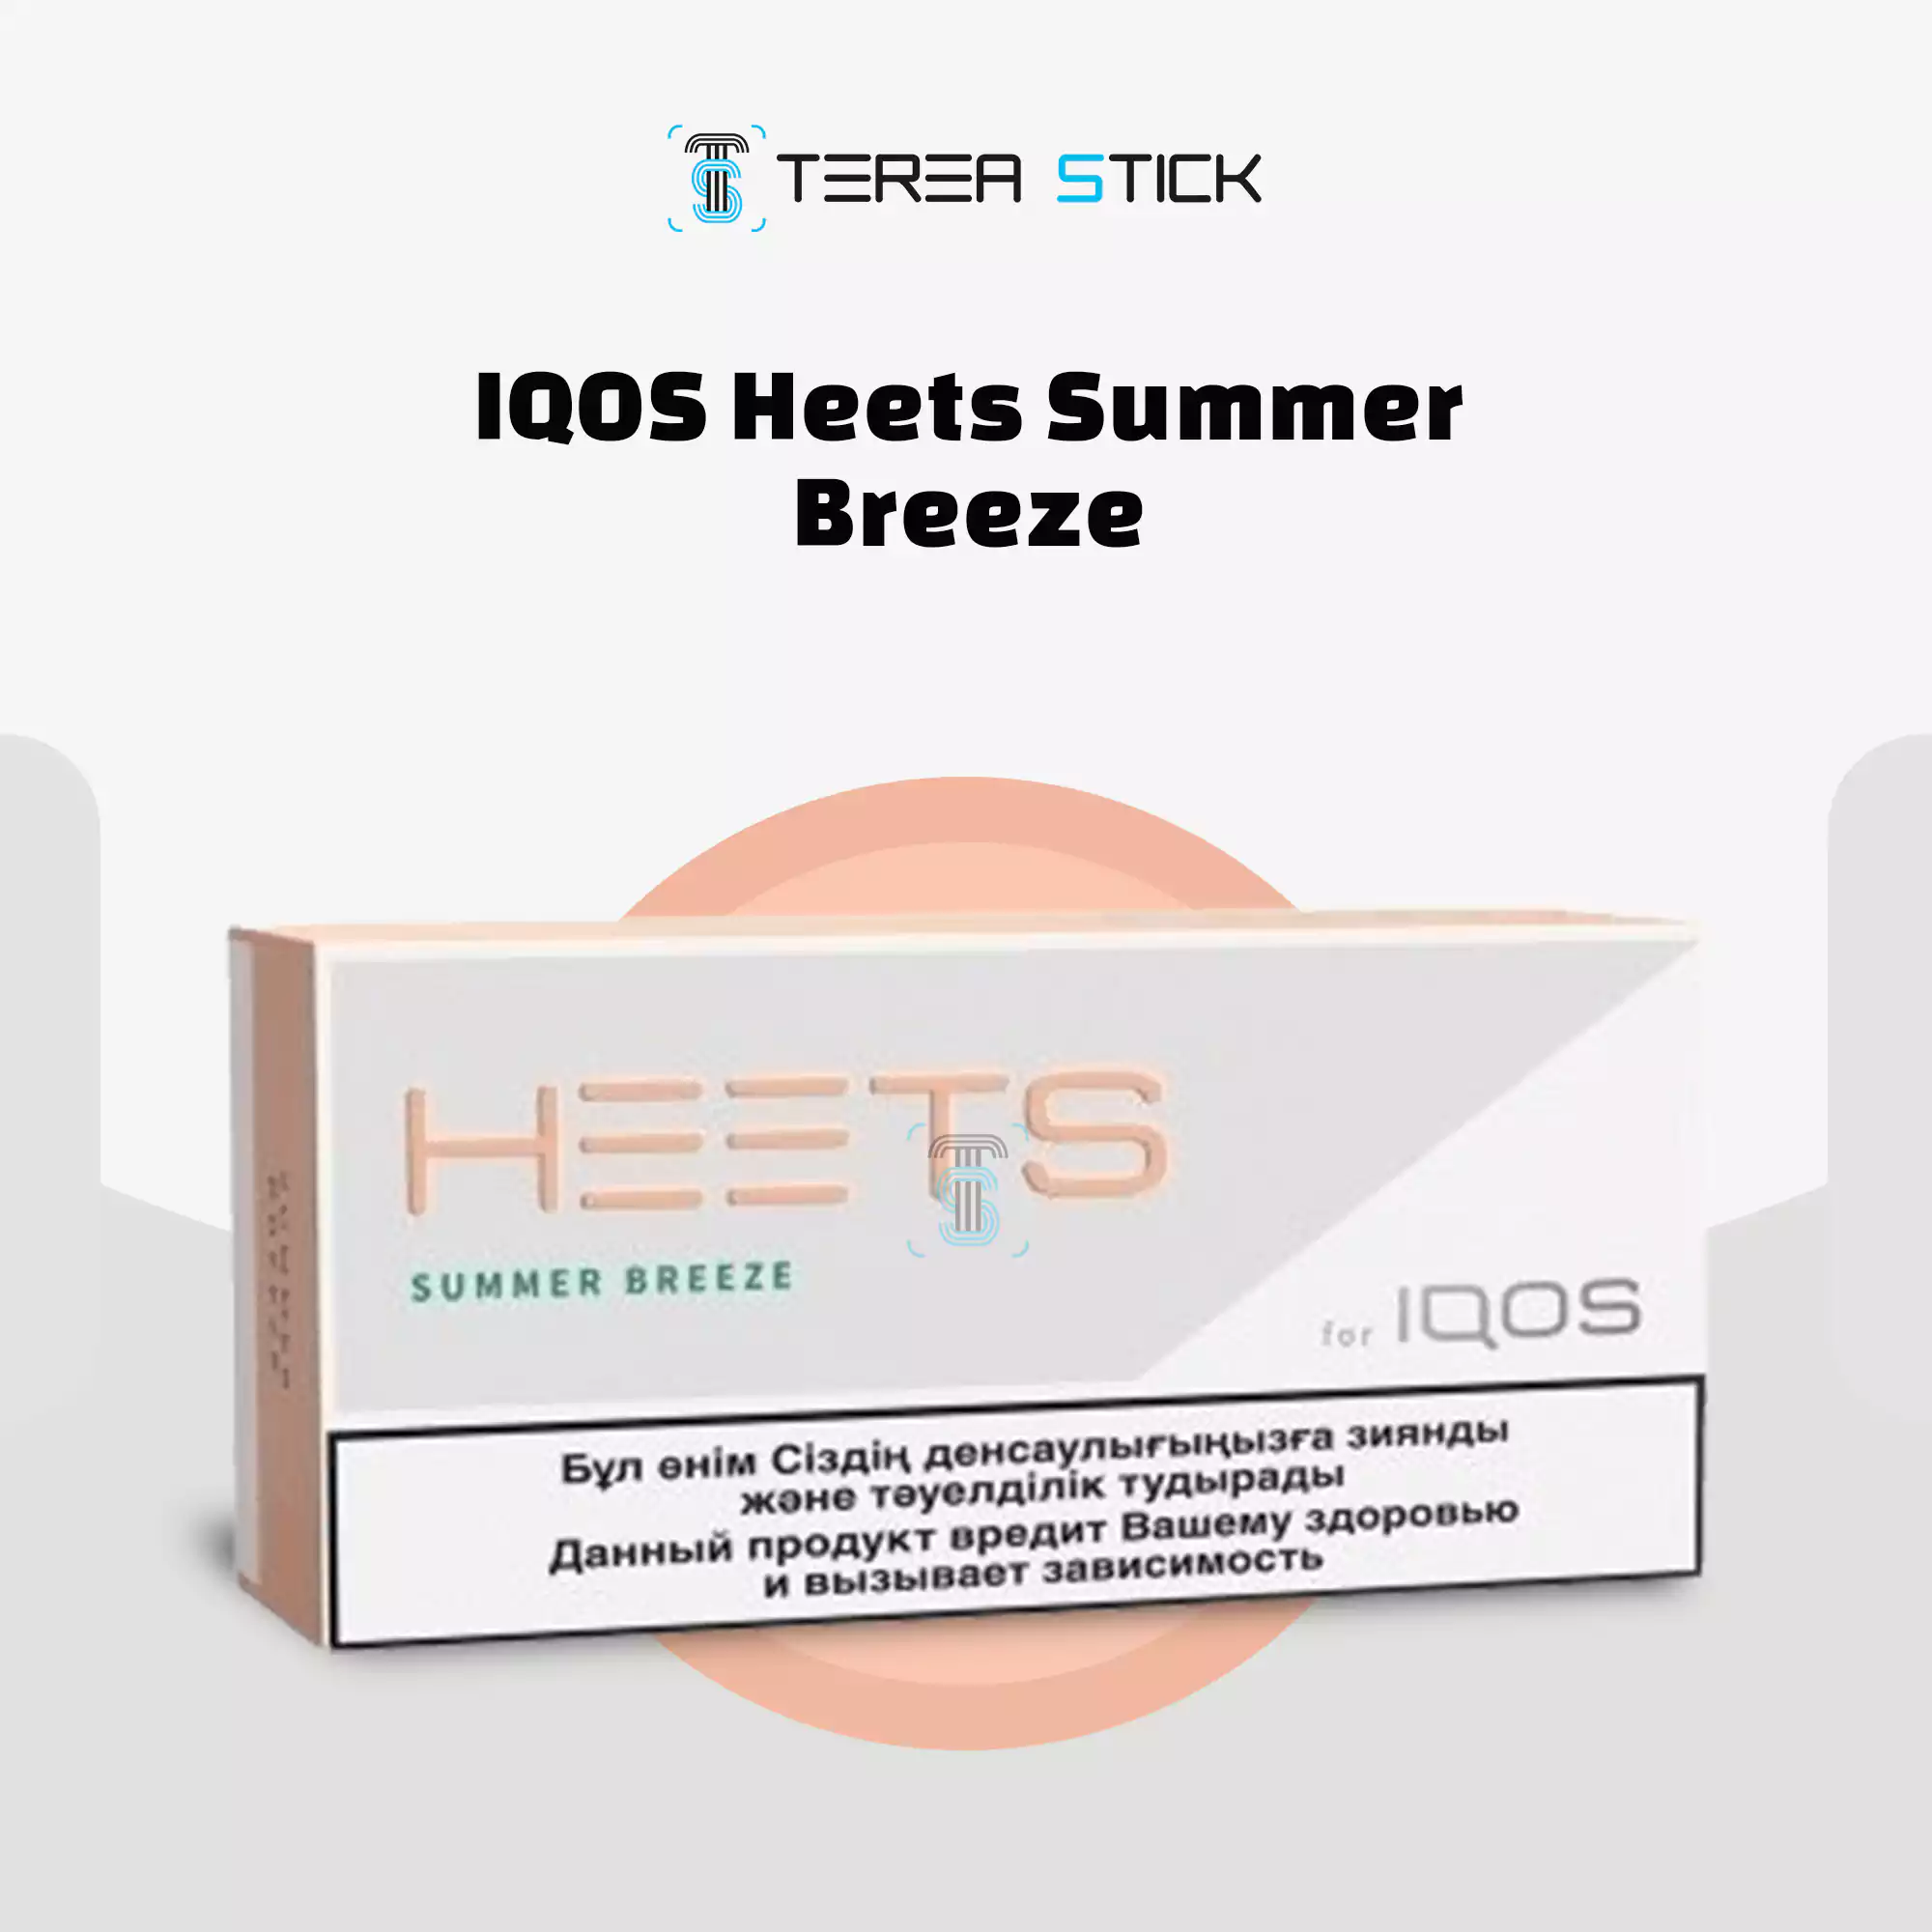 IQOS Heets Summer Breeze In Dubai, UAE